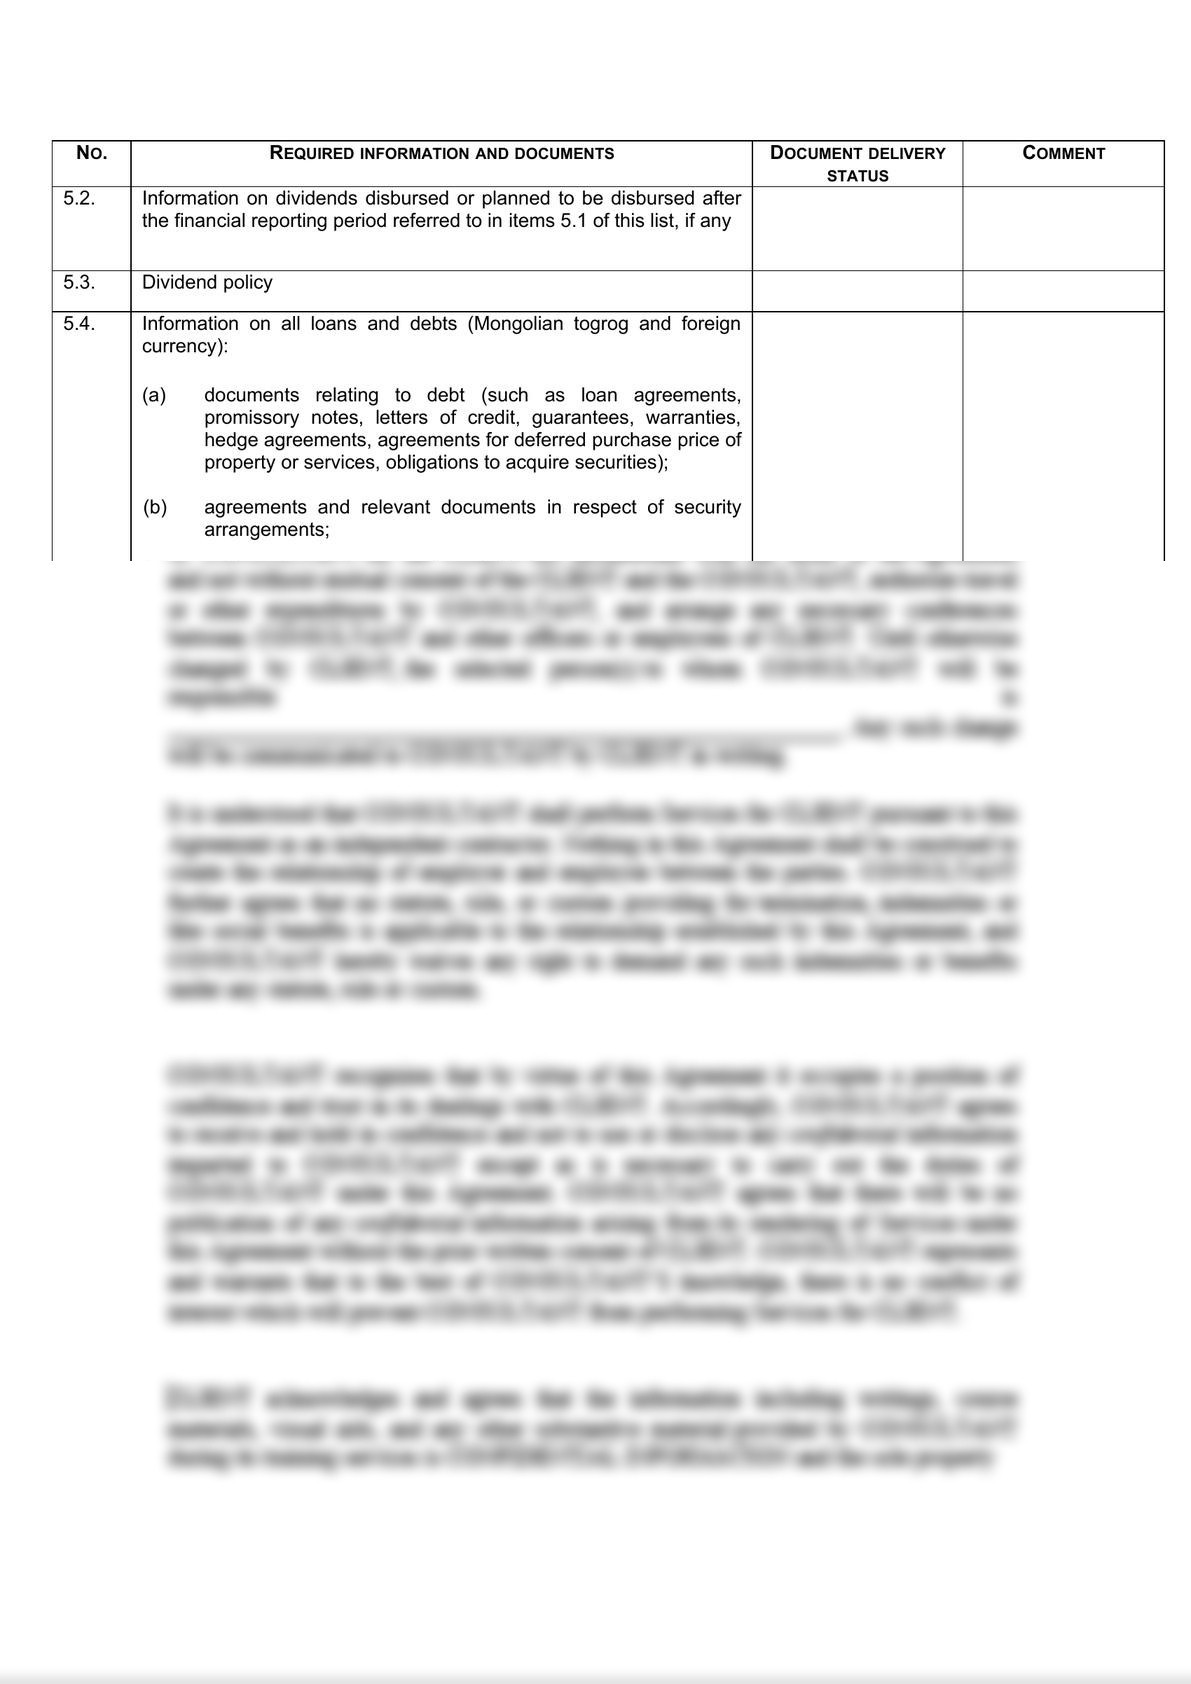 Legal due diligence checklist (Mongolian legal entities)    -2